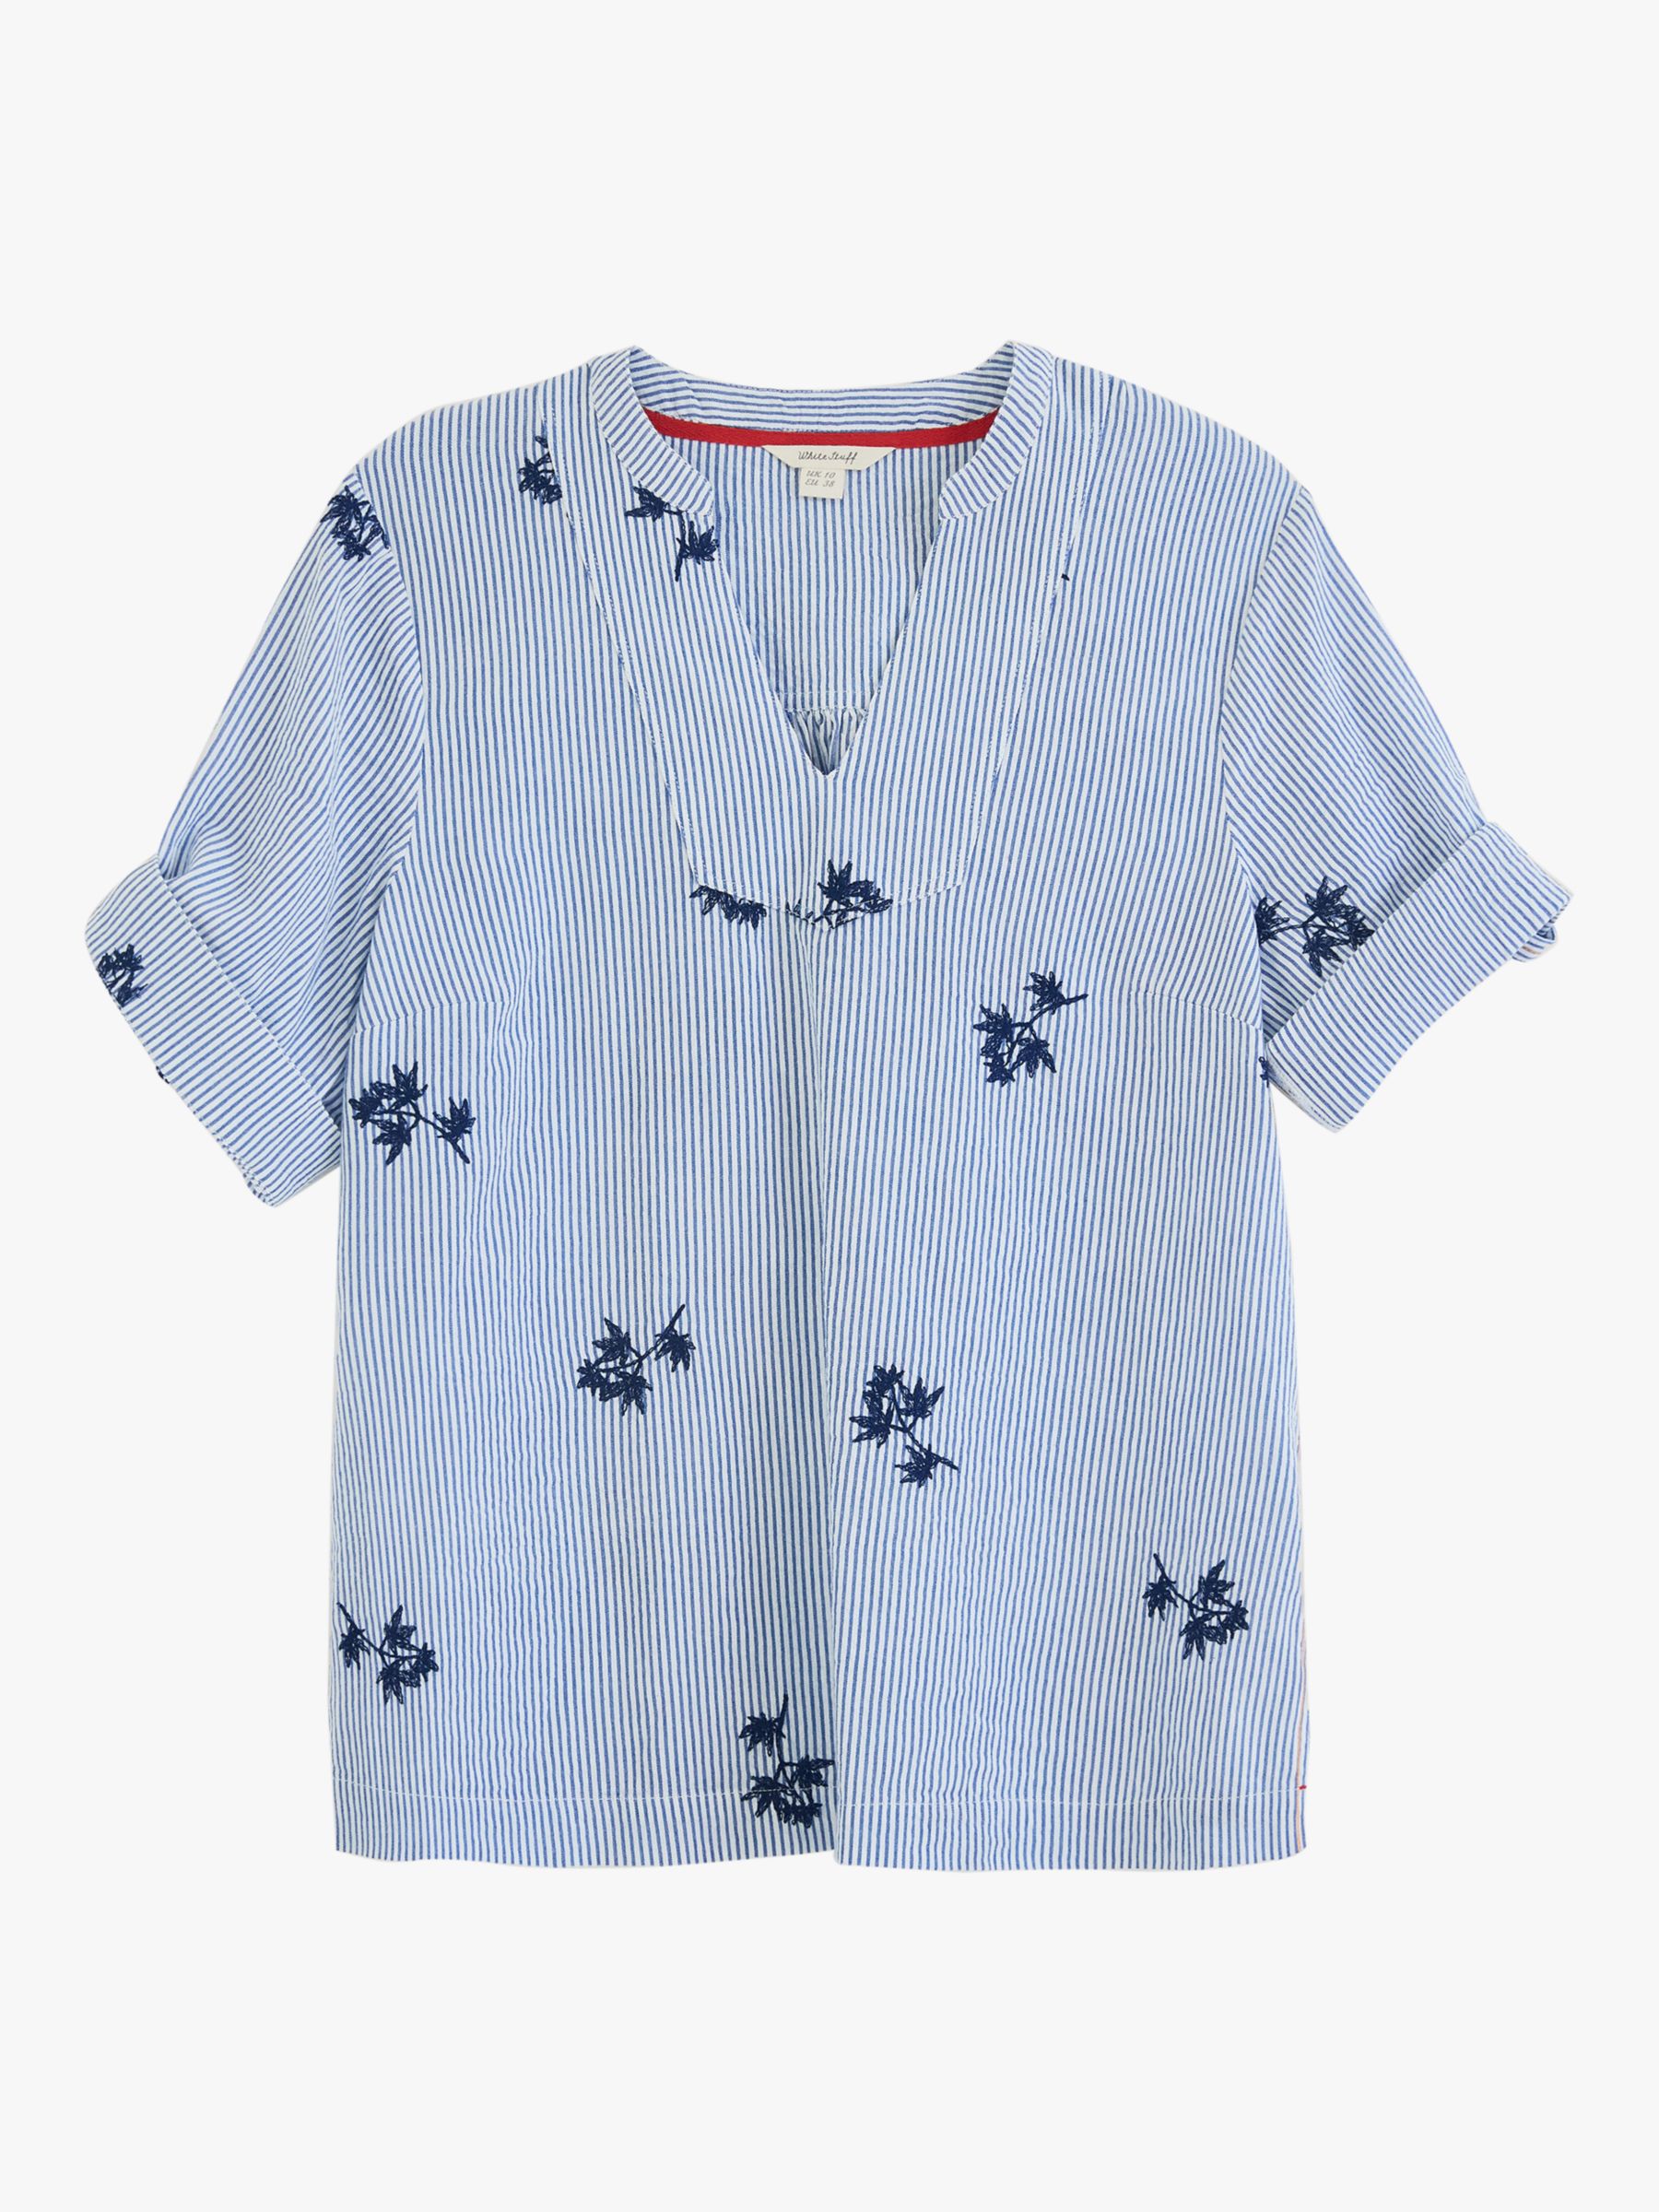 White Stuff Daytime Embroidered Cotton Shirt, Blue